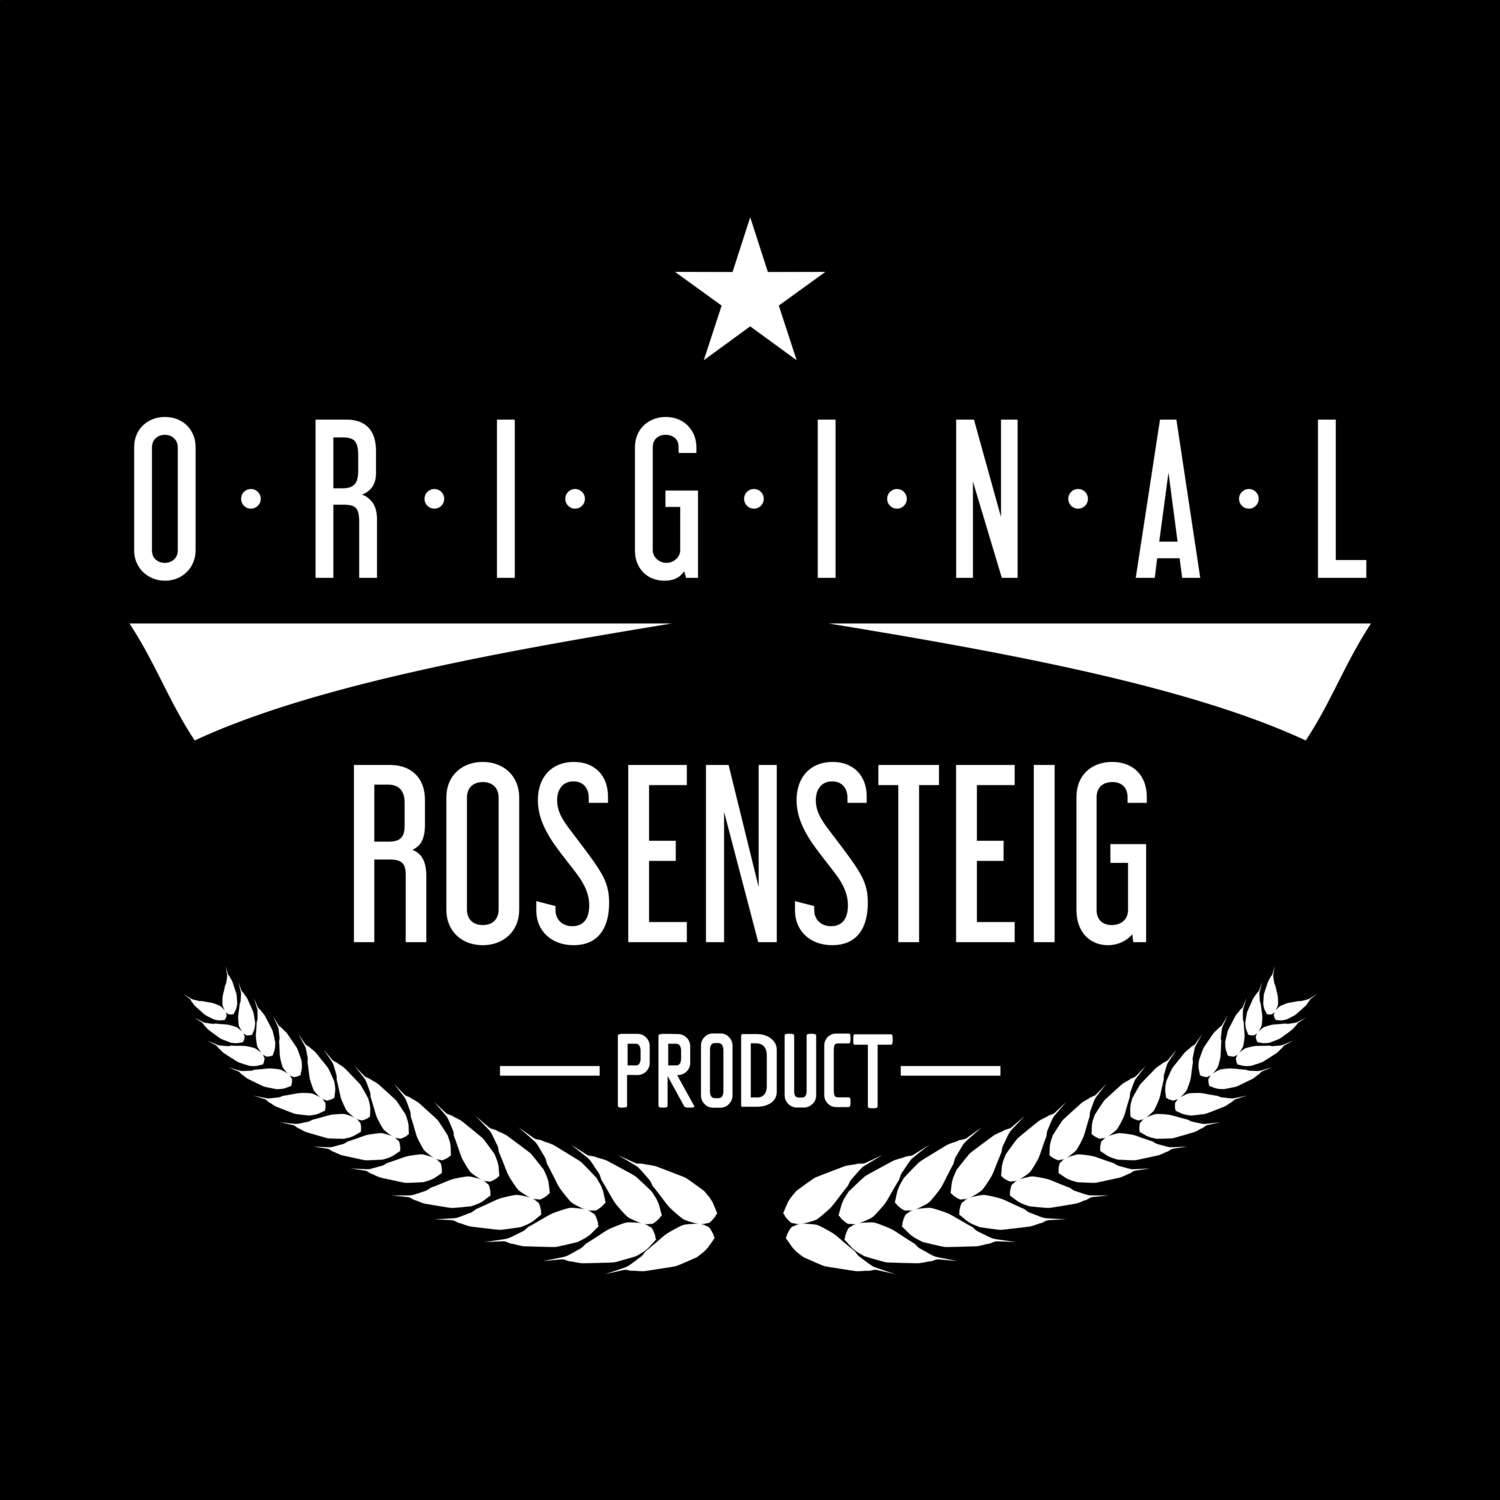 Rosensteig T-Shirt »Original Product«